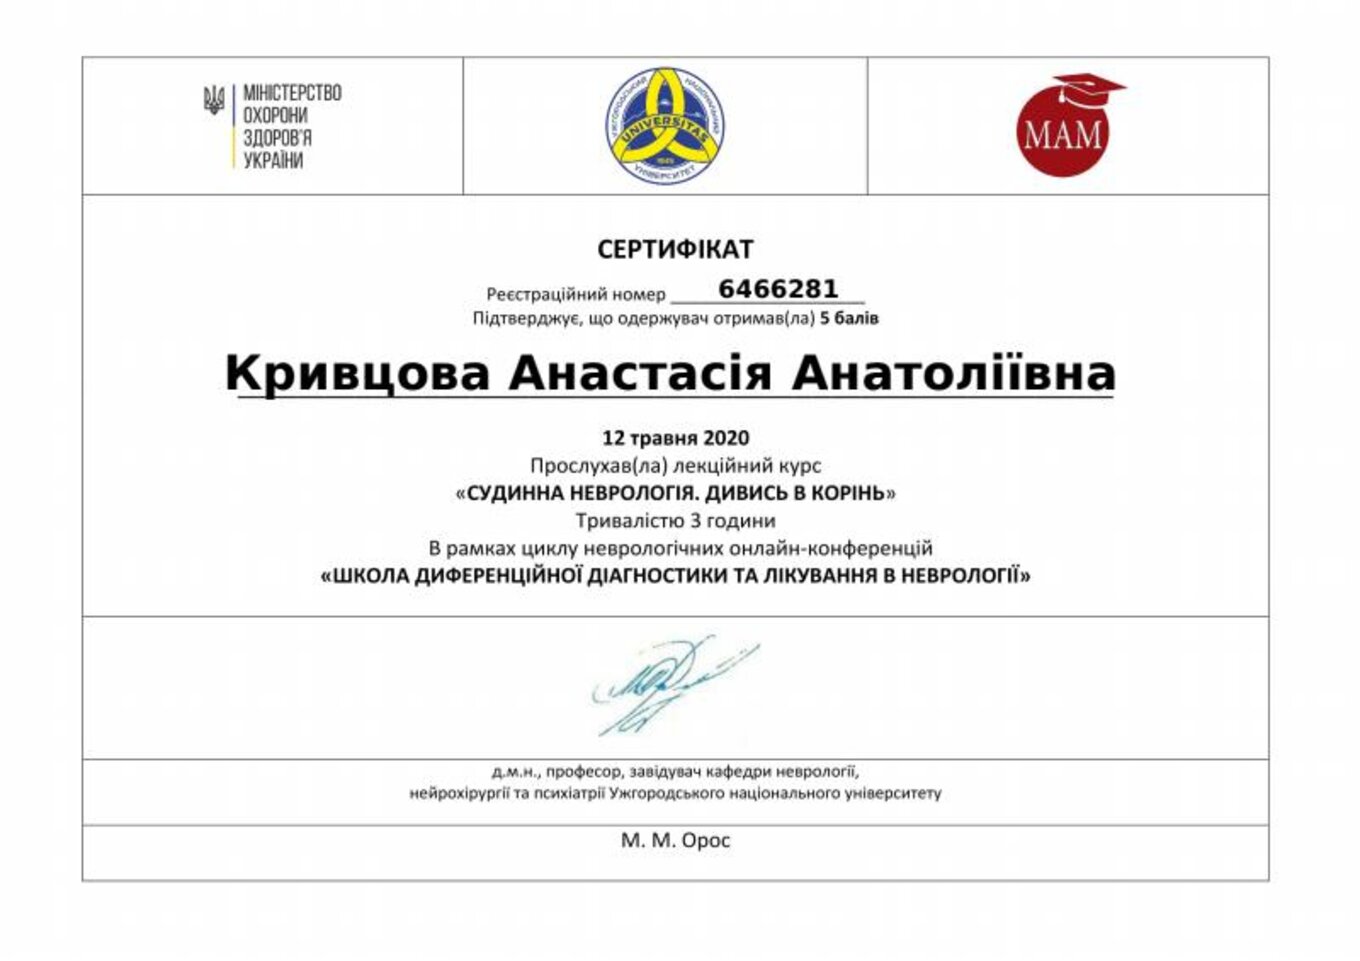 certificates/kuzmenko-krivcova-anastasiya-anatoliyivna/erc-krivcova-cert-19.jpg